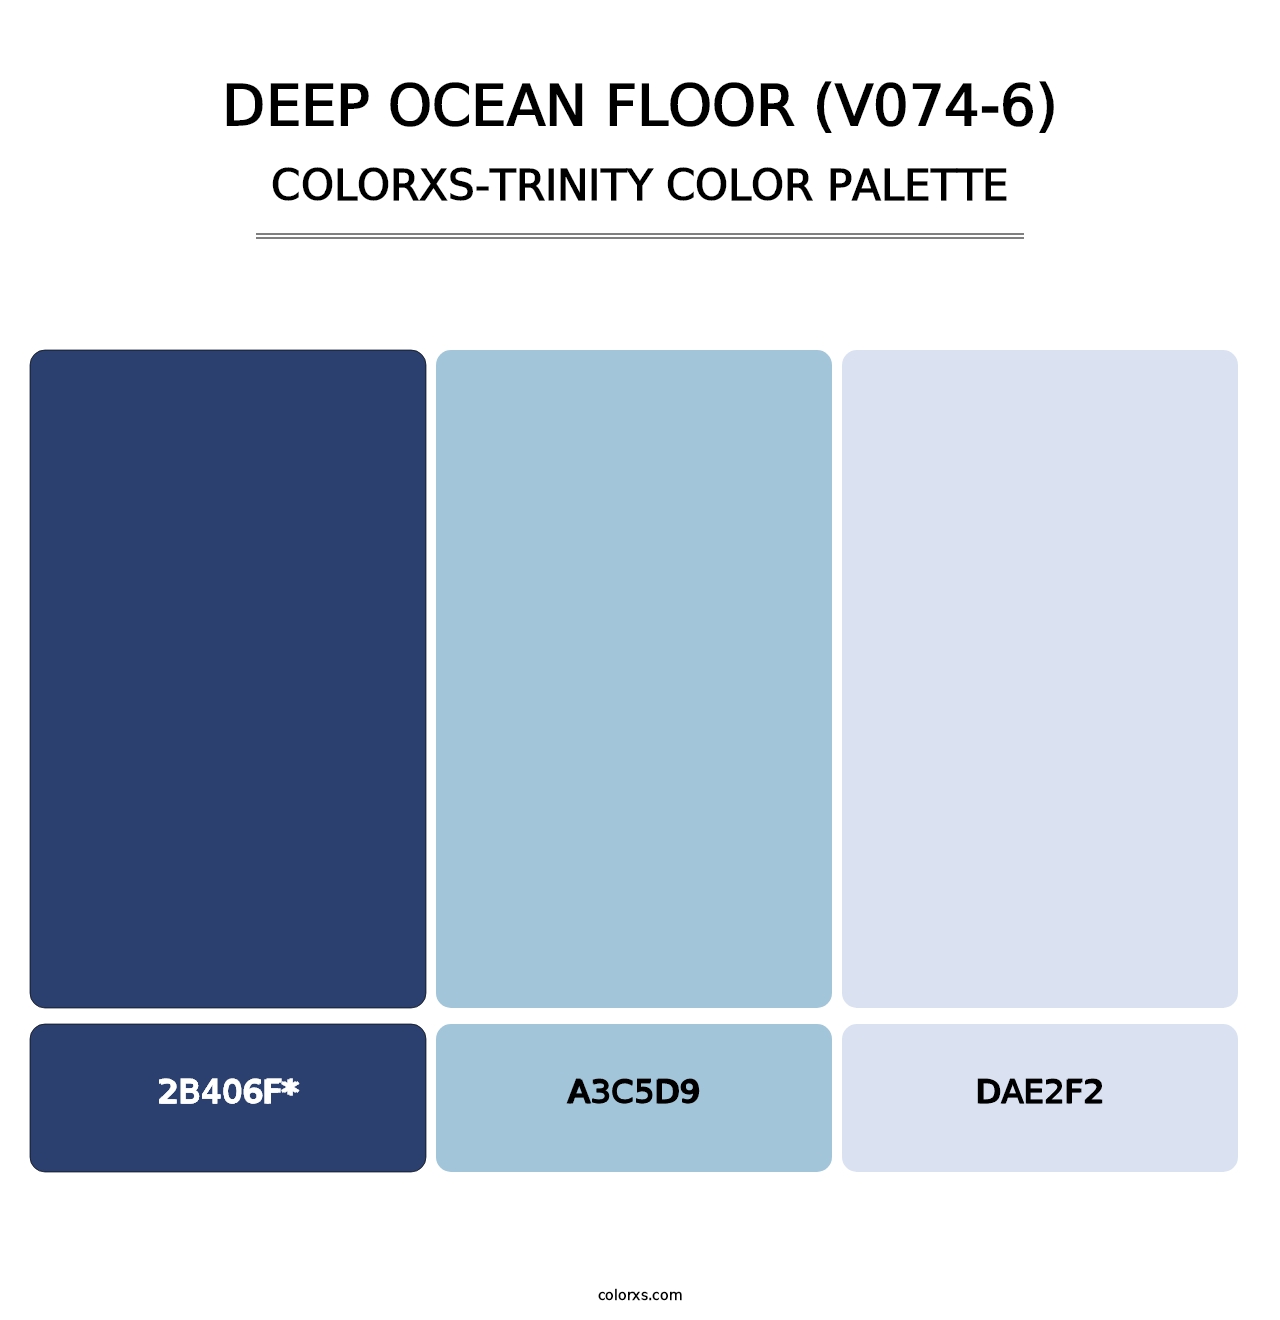 Deep Ocean Floor (V074-6) - Colorxs Trinity Palette